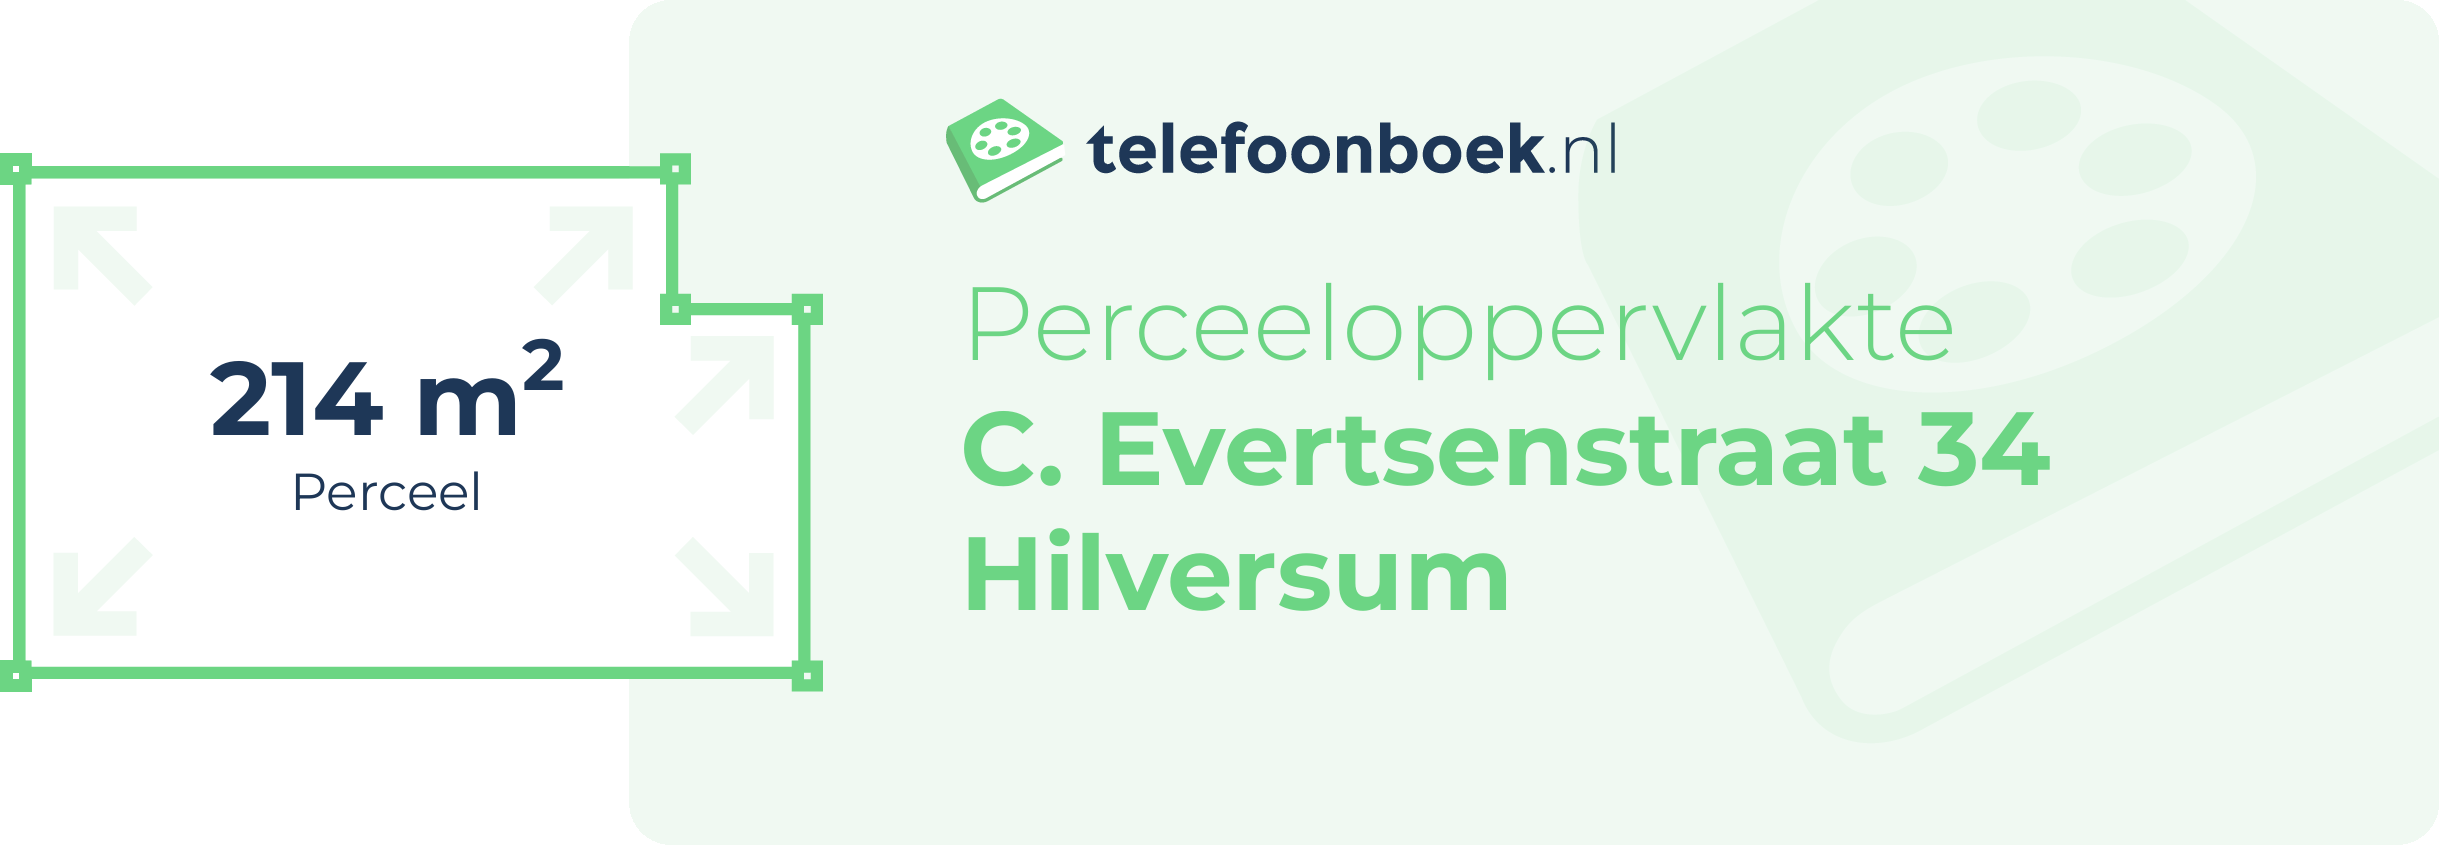 Perceeloppervlakte C. Evertsenstraat 34 Hilversum